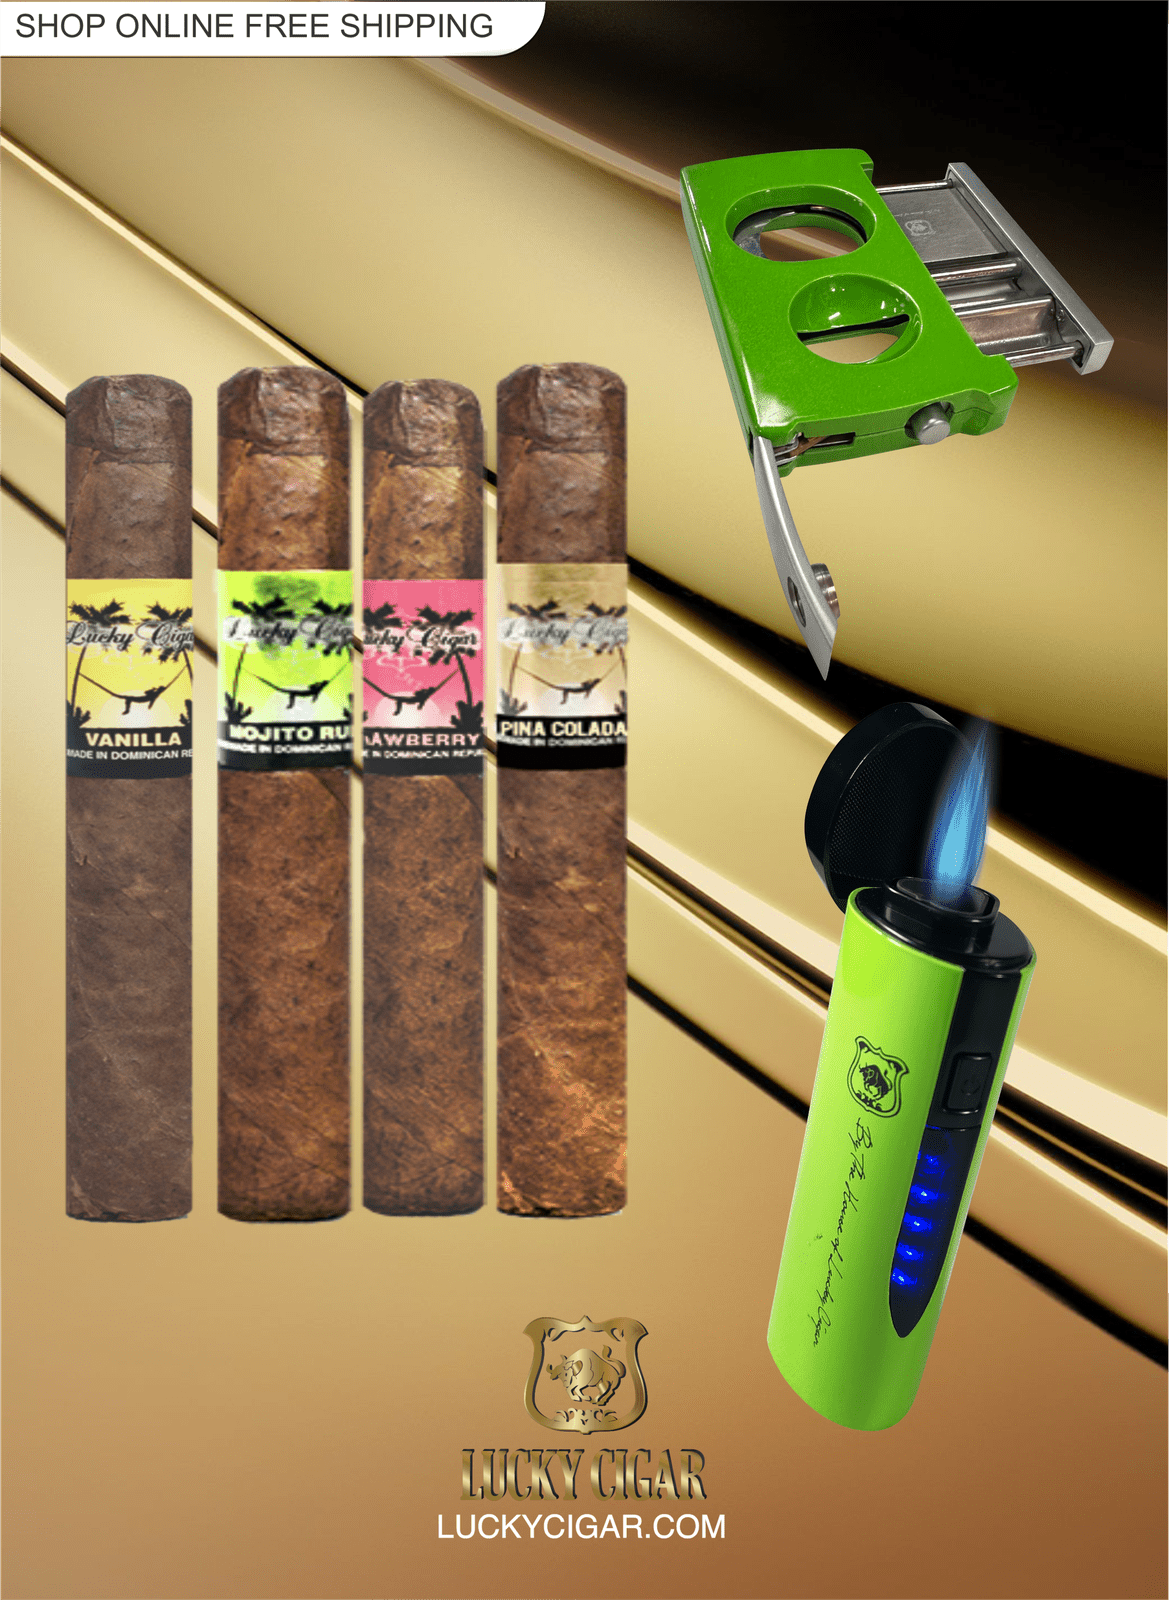 The 4 Sampler Cigars Set :